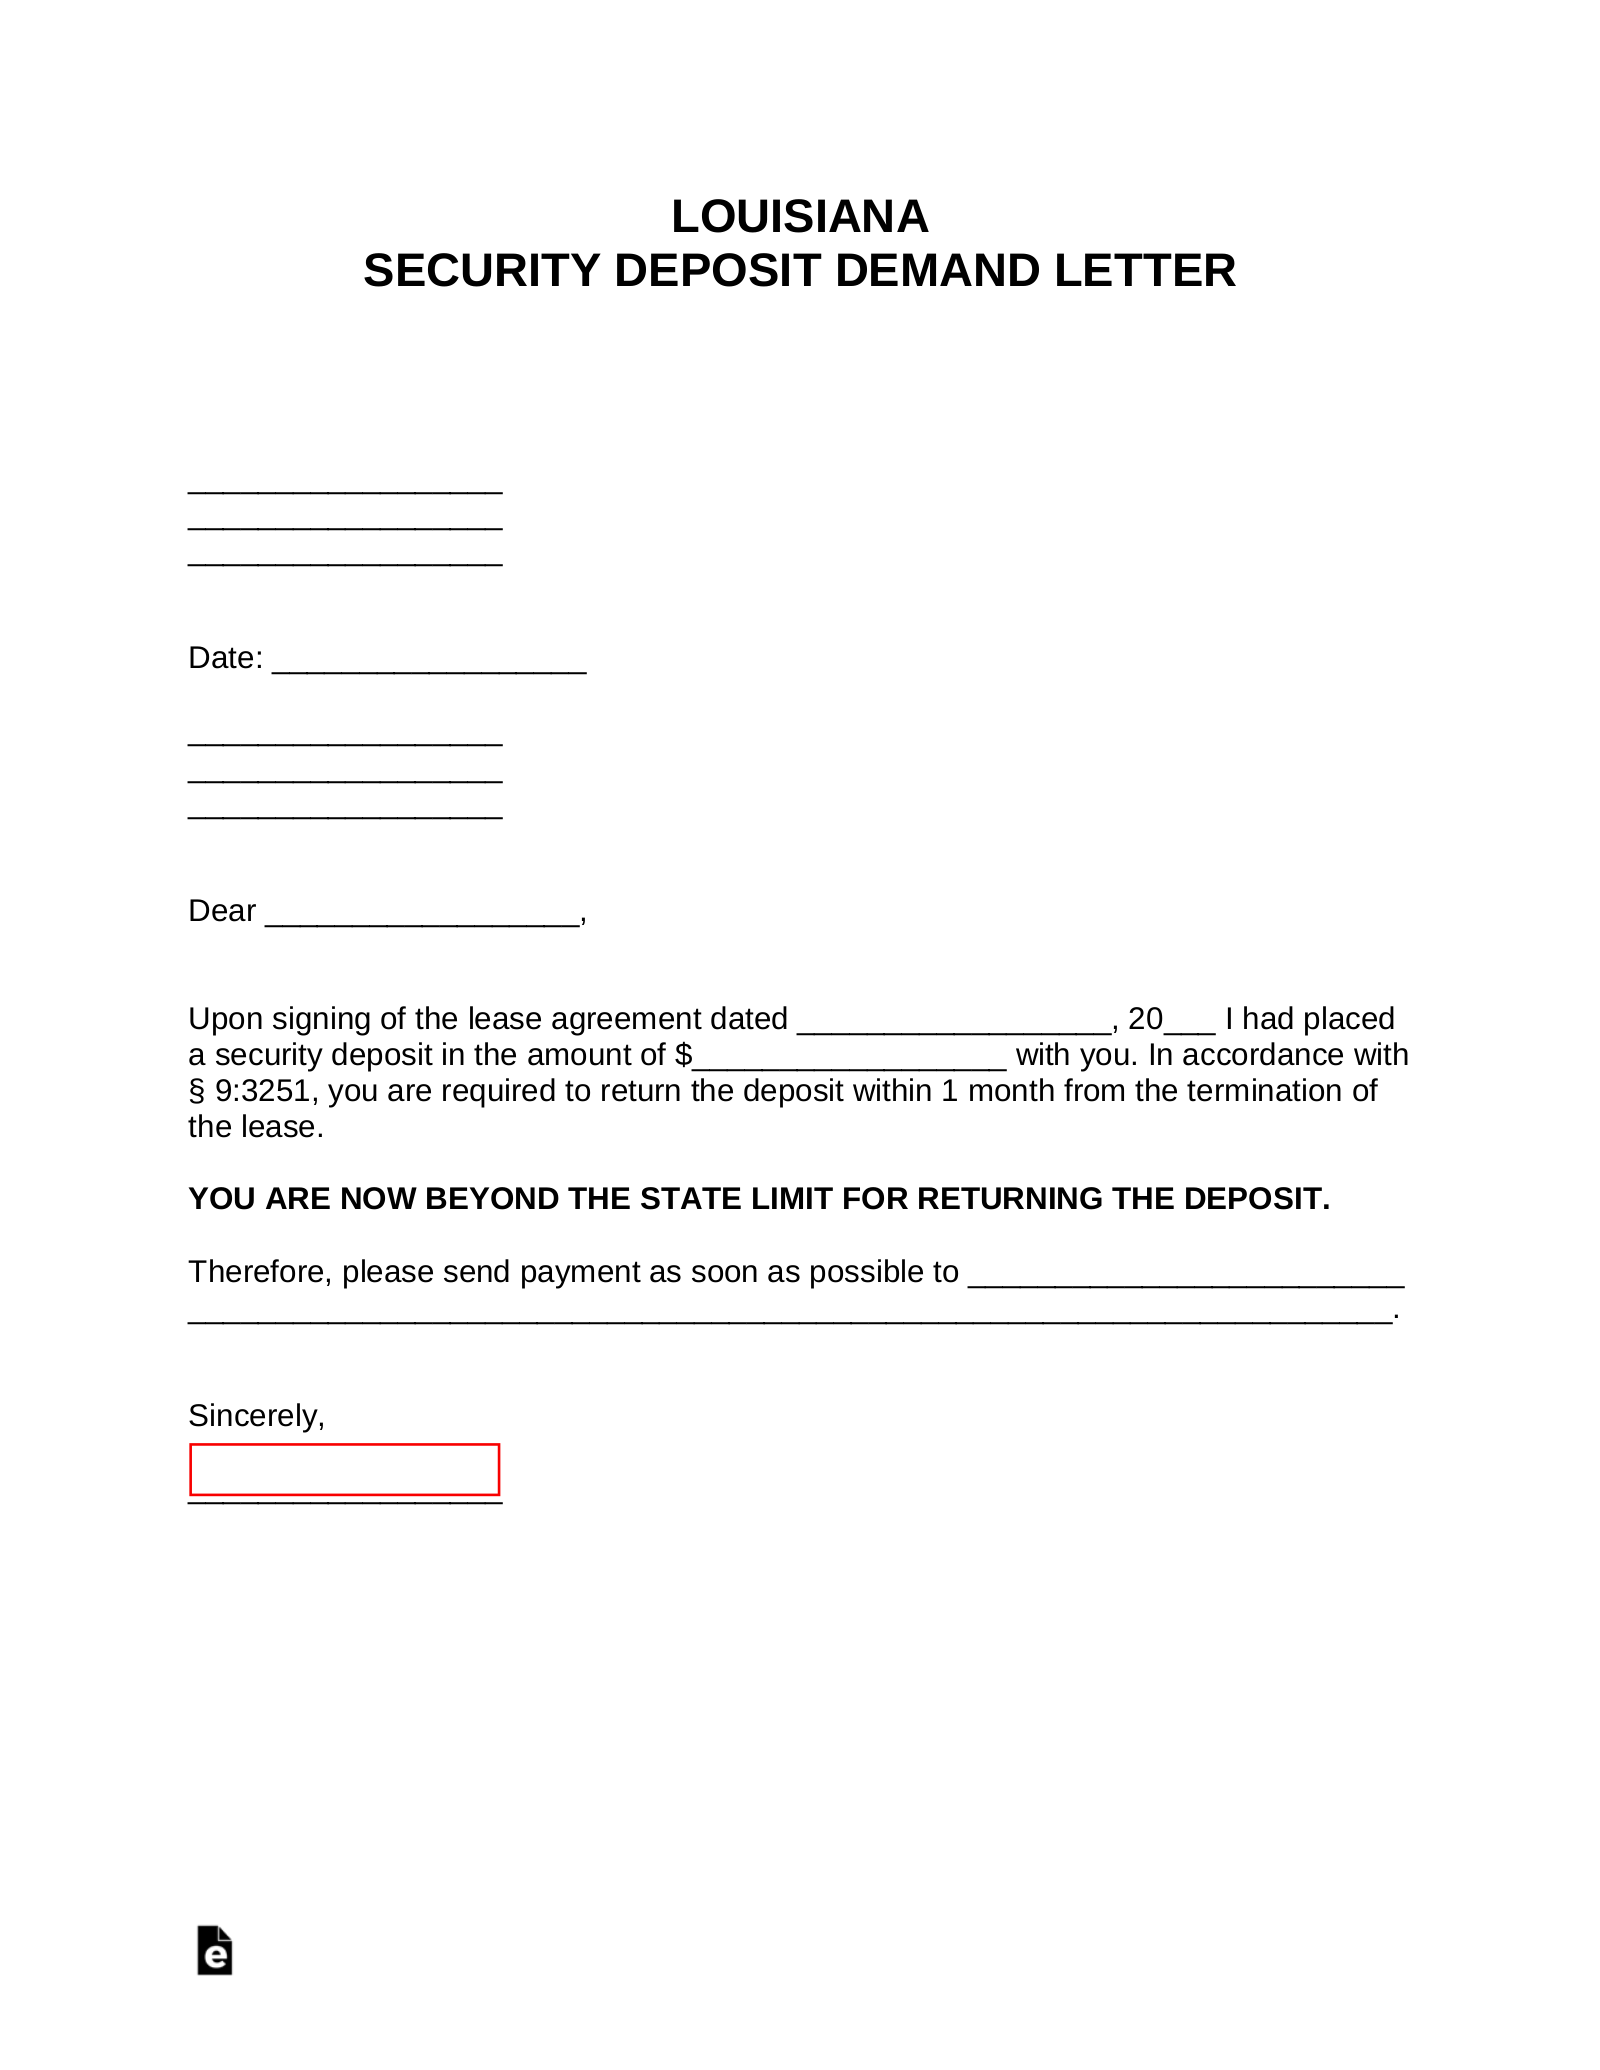 Louisiana Security Deposit Demand Letter